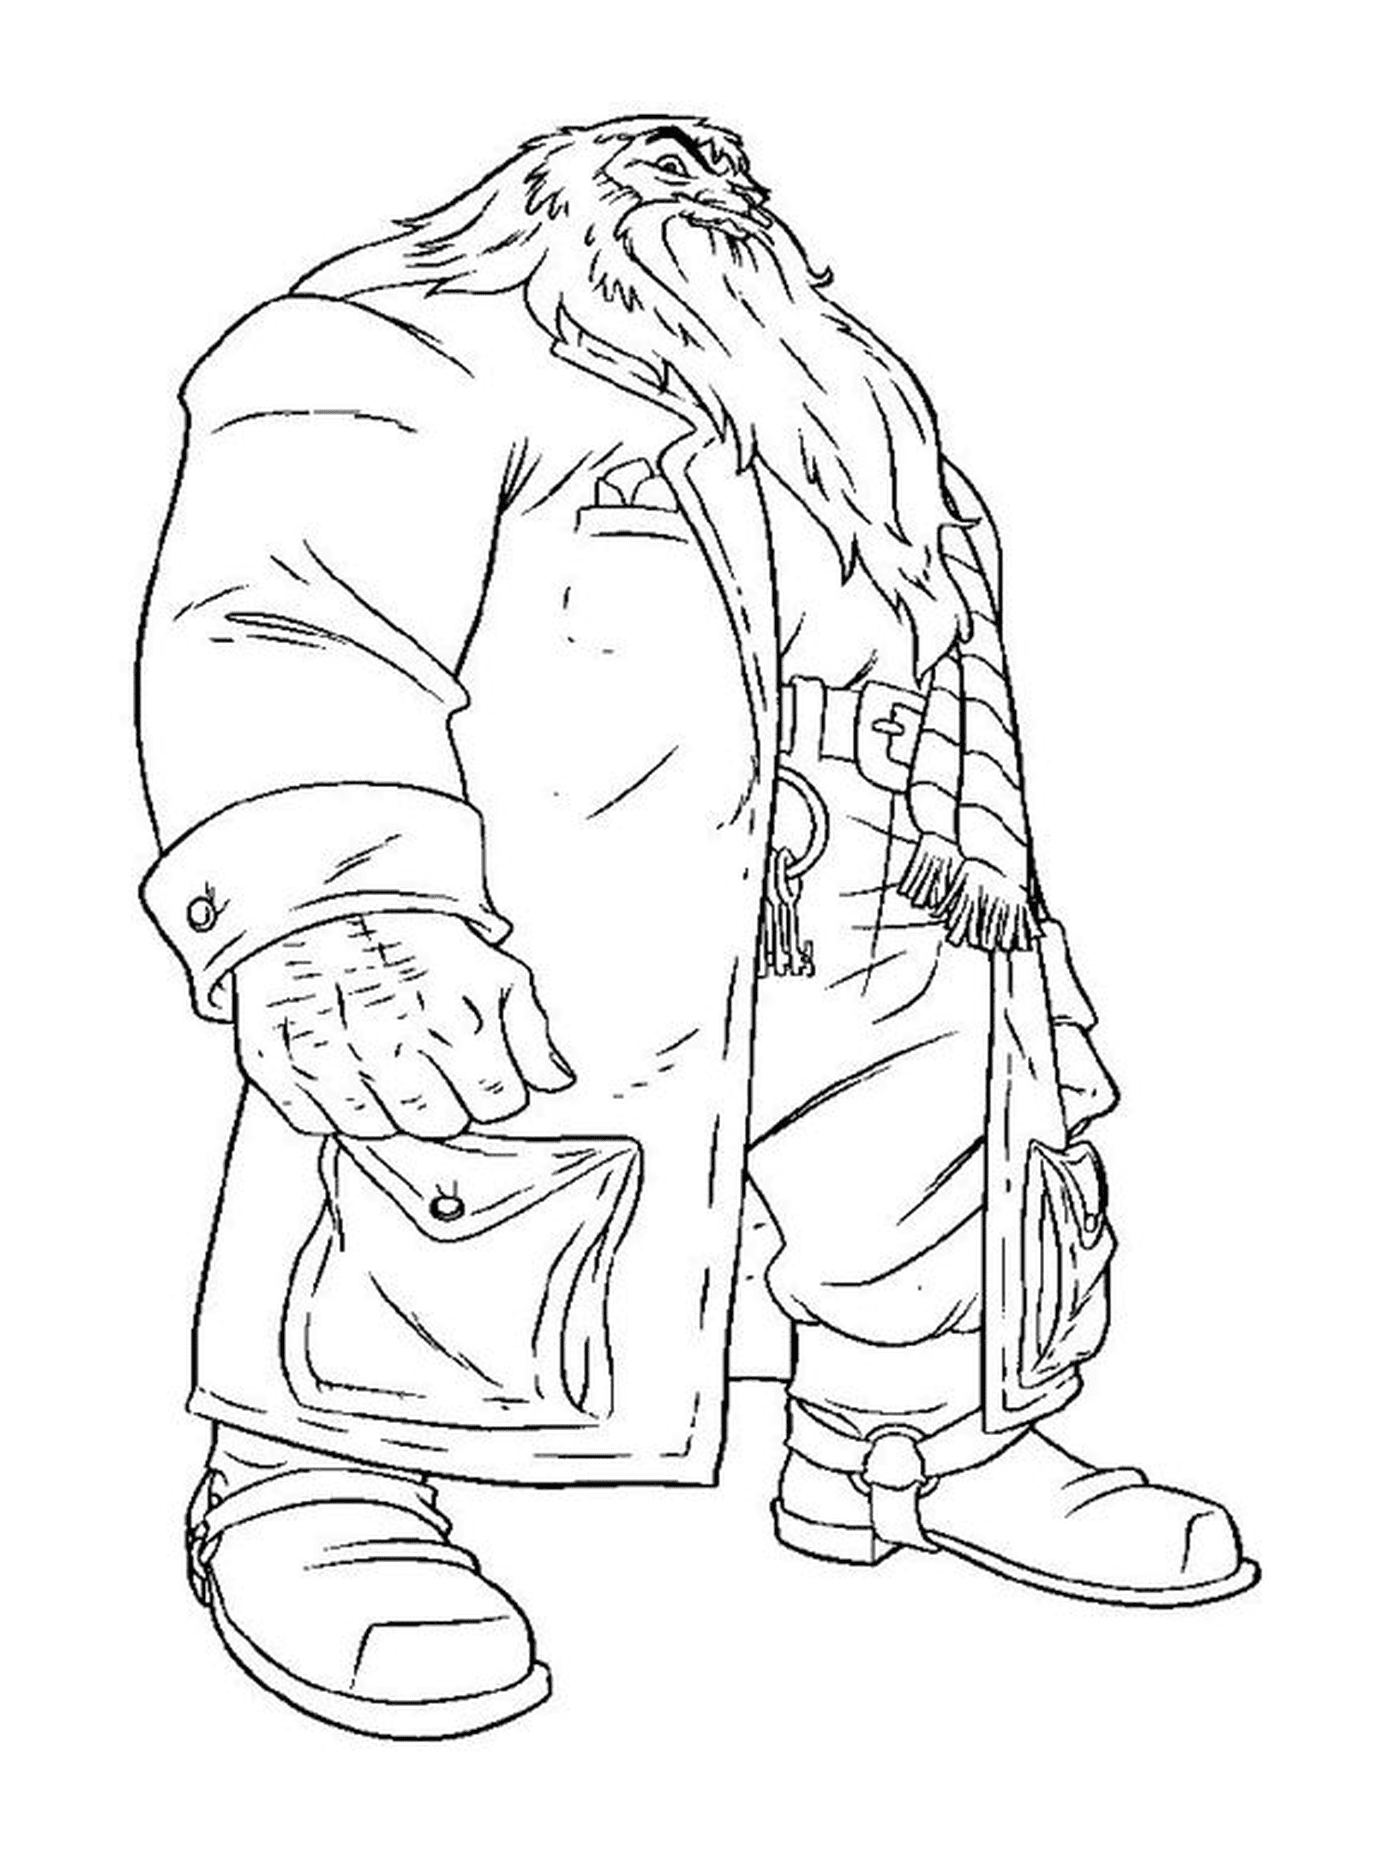   Hagrid en long manteau 